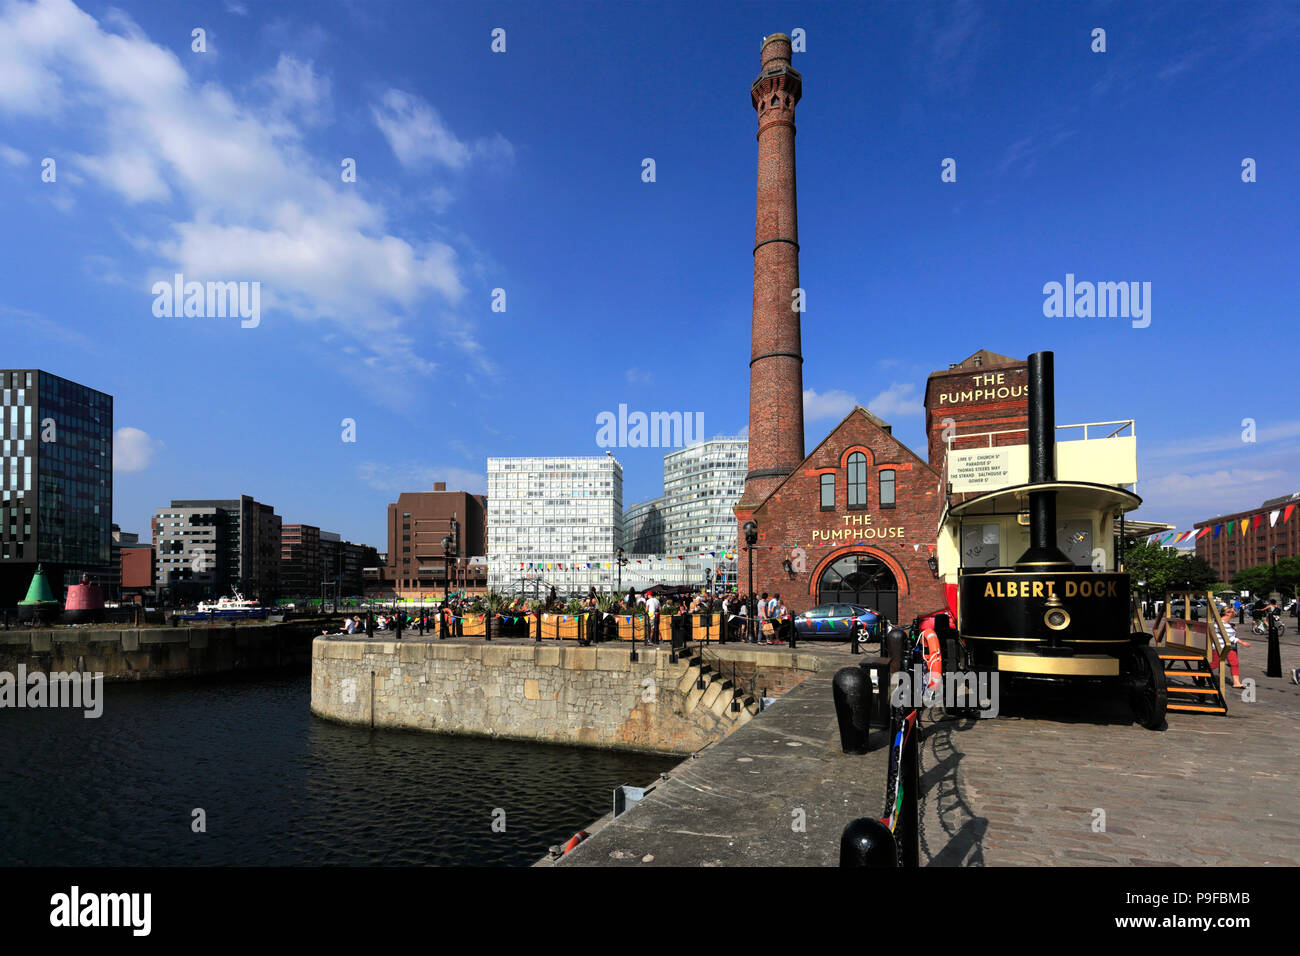 The Royal Albert Dock, George's Parade, Pier Head, UNESCO World Heritage Site, Liverpool, Merseyside, England, UK Stock Photo